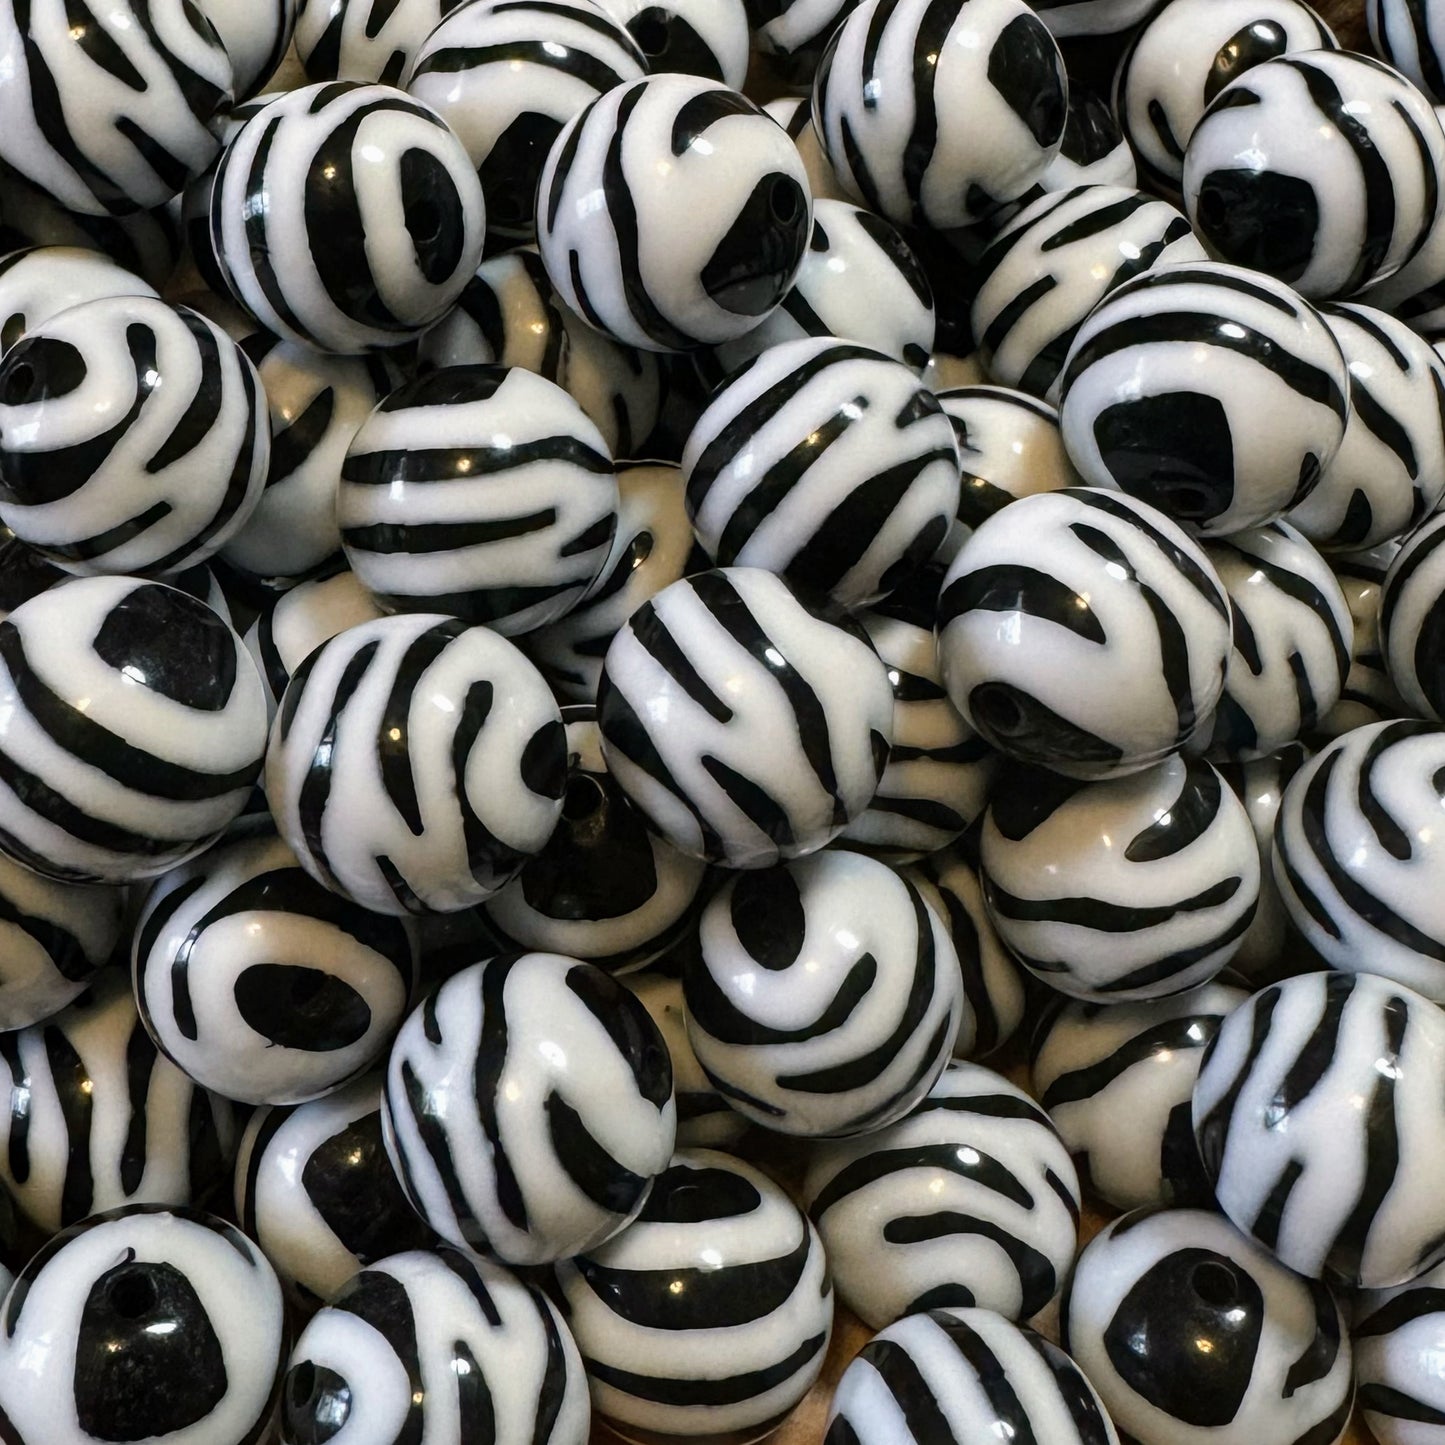 20mm Zebra Print Acrylic Bead